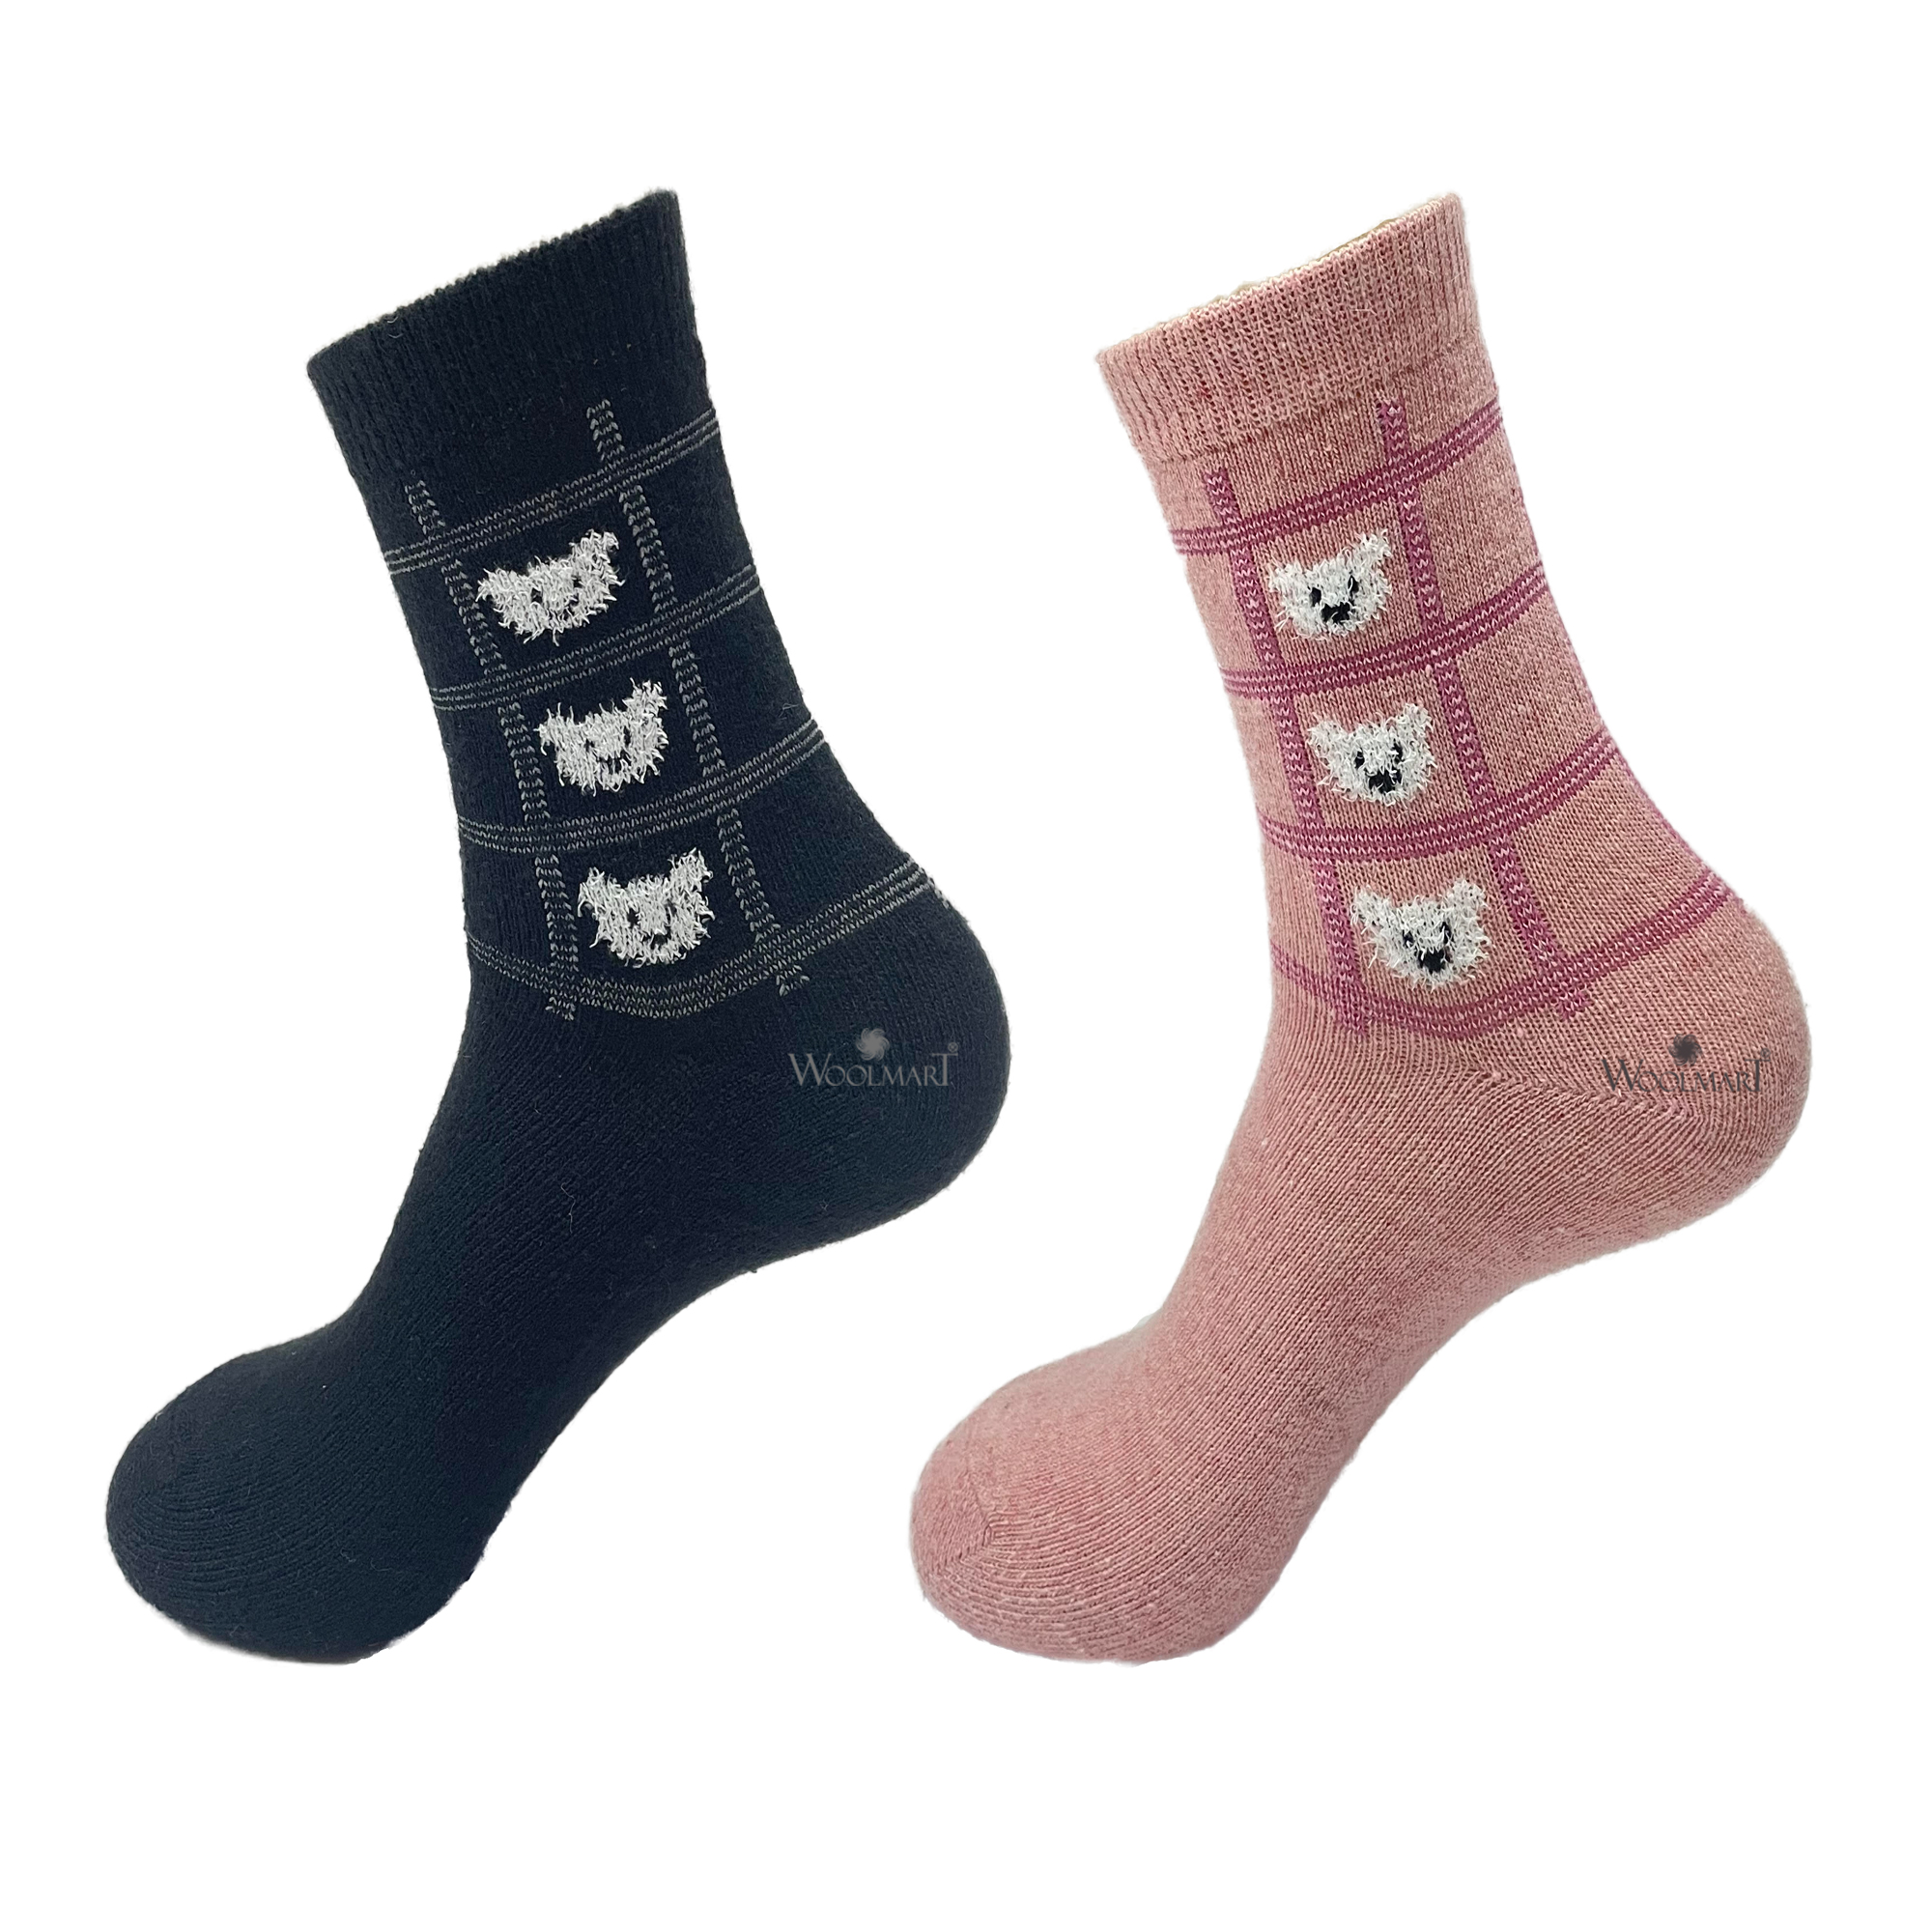 Warm Socks (Pack of 2) Black & Pink